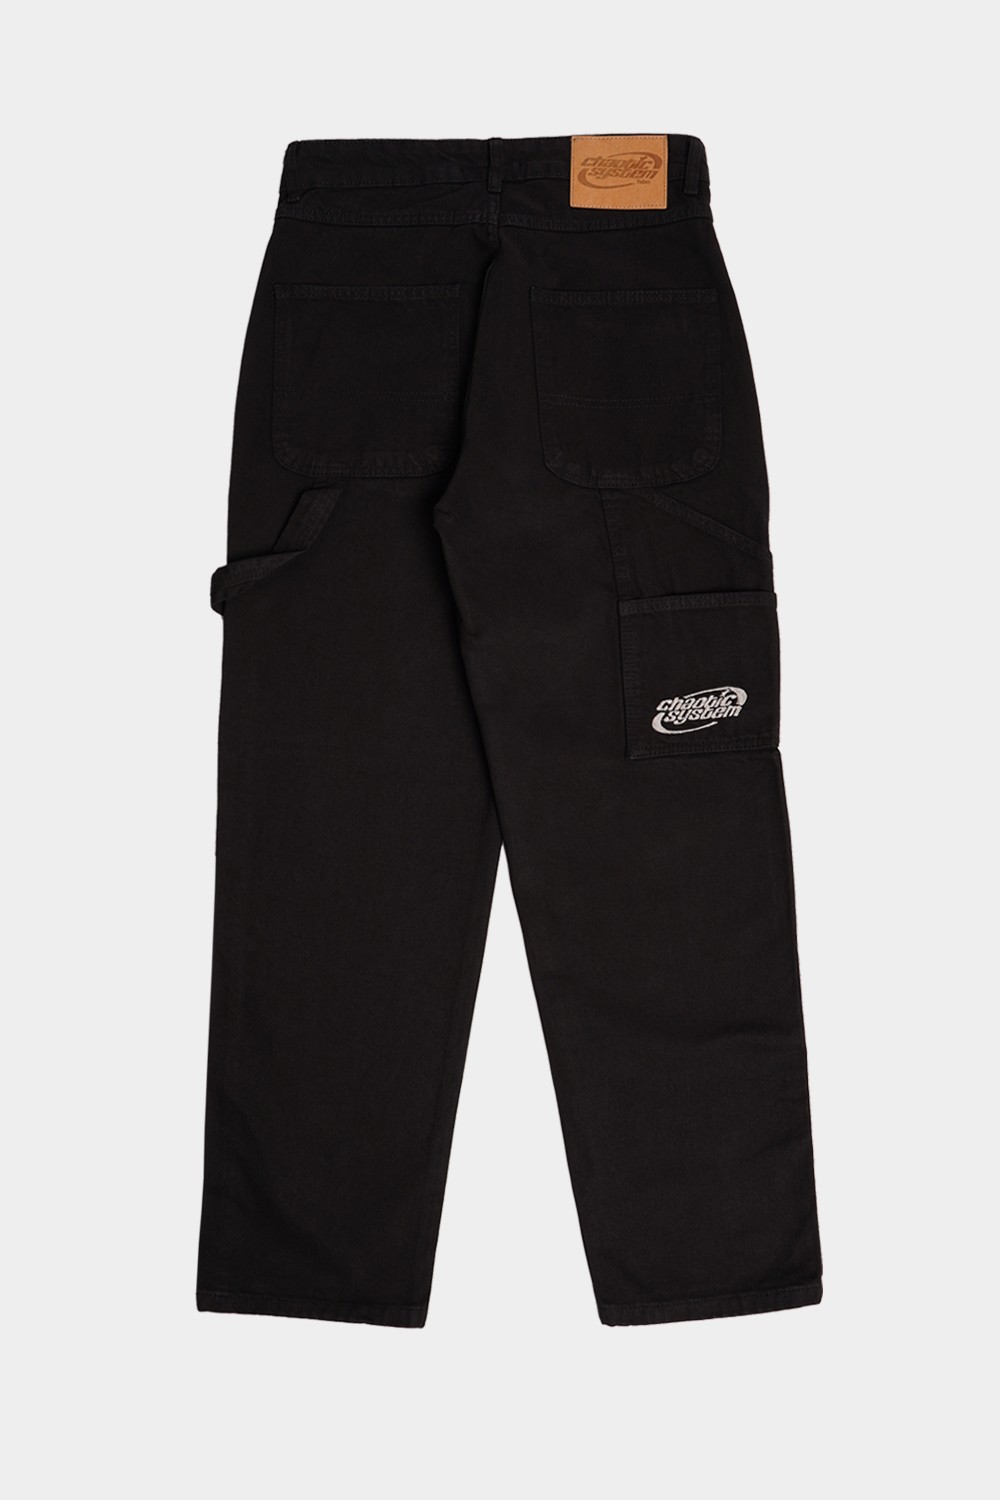 Black Baggy Carpenter Jeans (FSBN3)